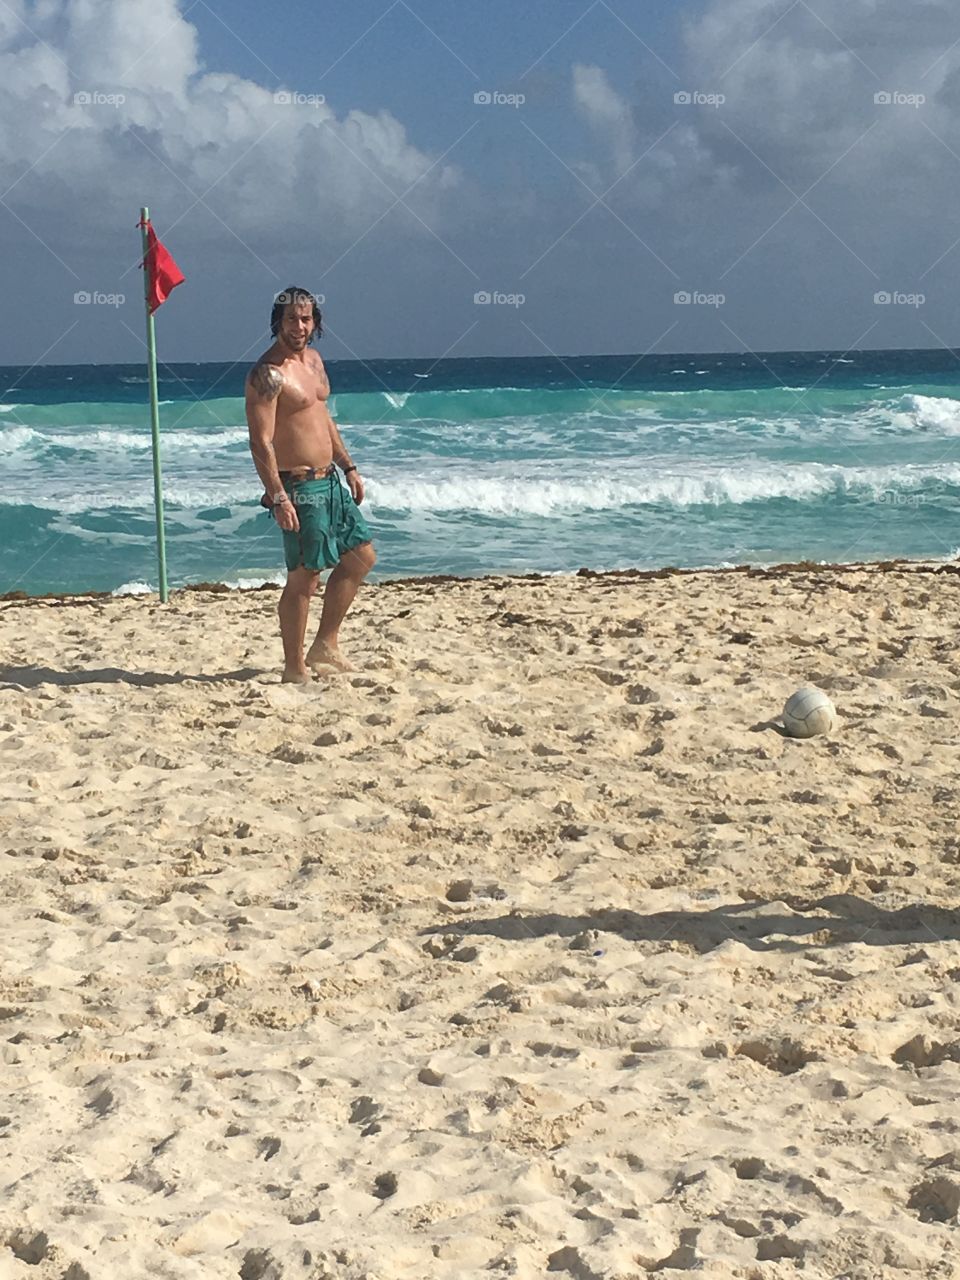 Volleyball on Cancun beach